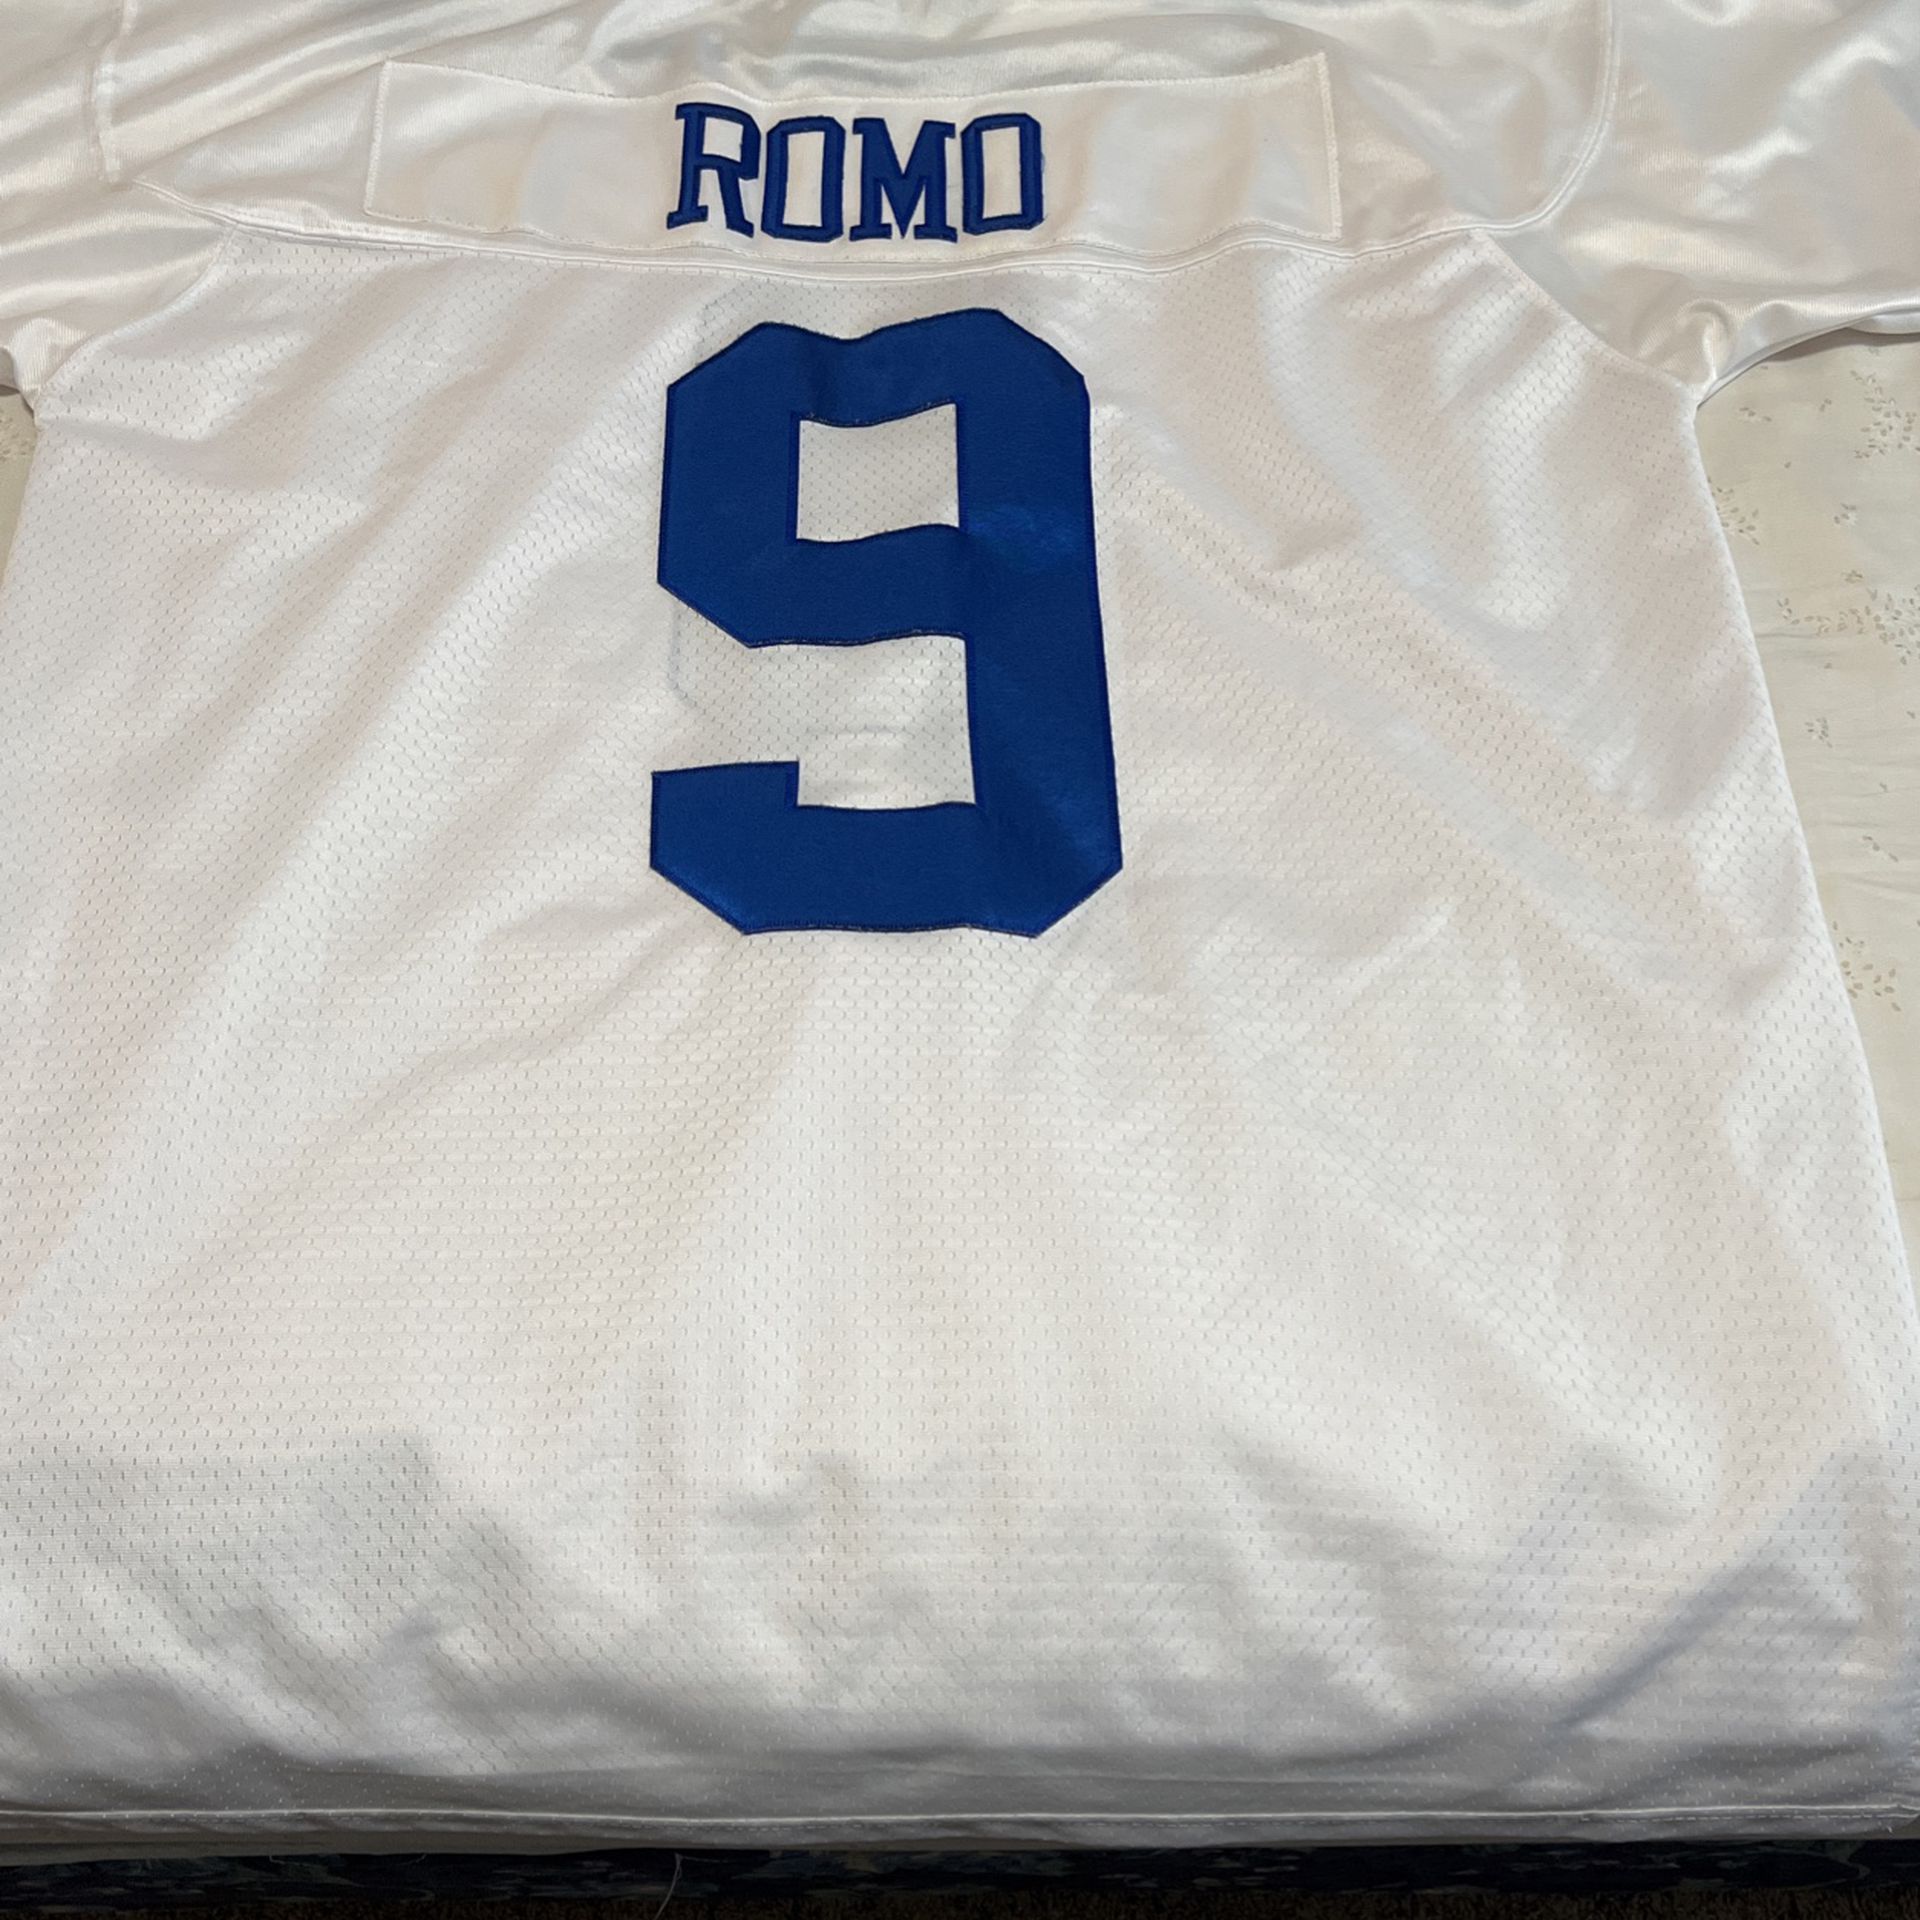 Tony Romo Jersey for Sale in Warsaw, IN - OfferUp